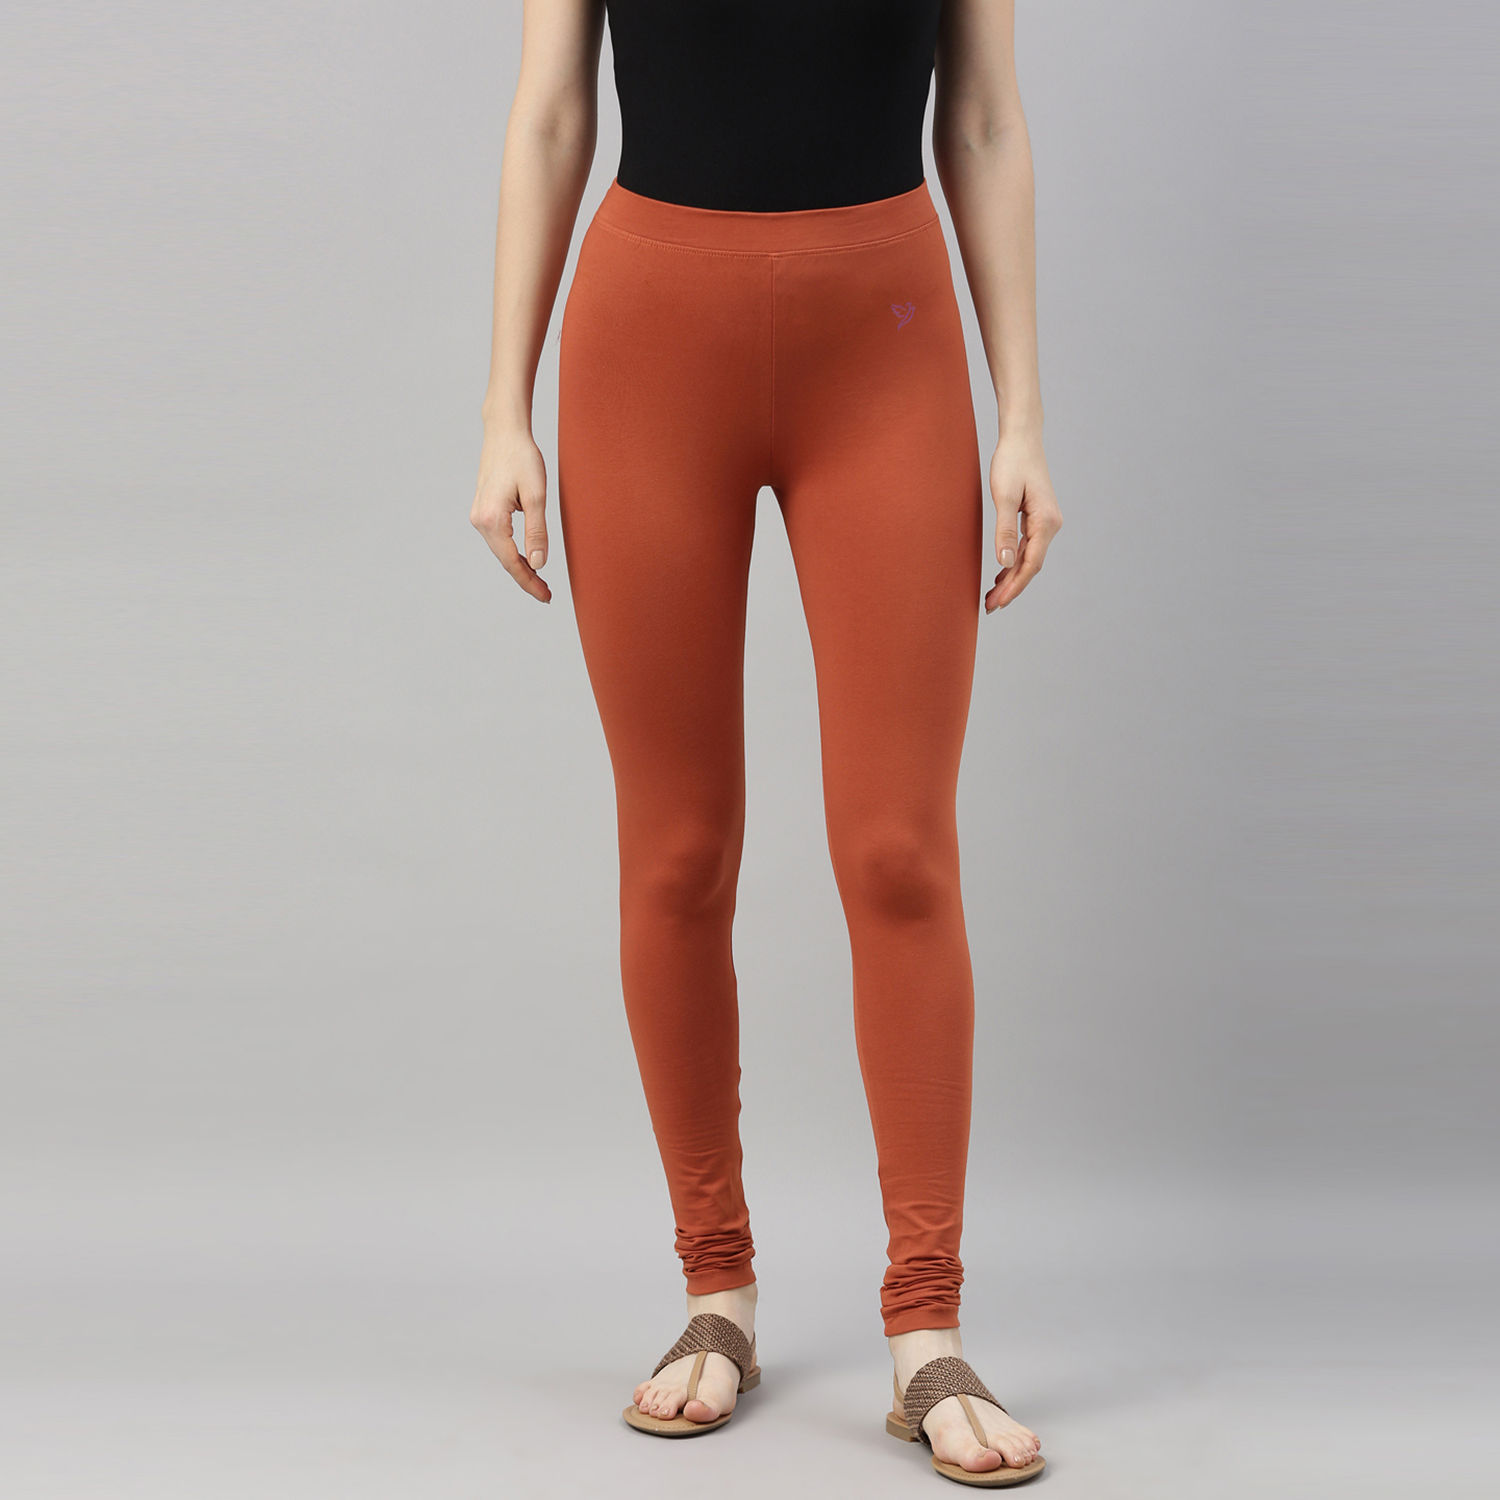 12 TikTok Yoga Pants Emma Chamberlain Would Approve  Teen Vogue